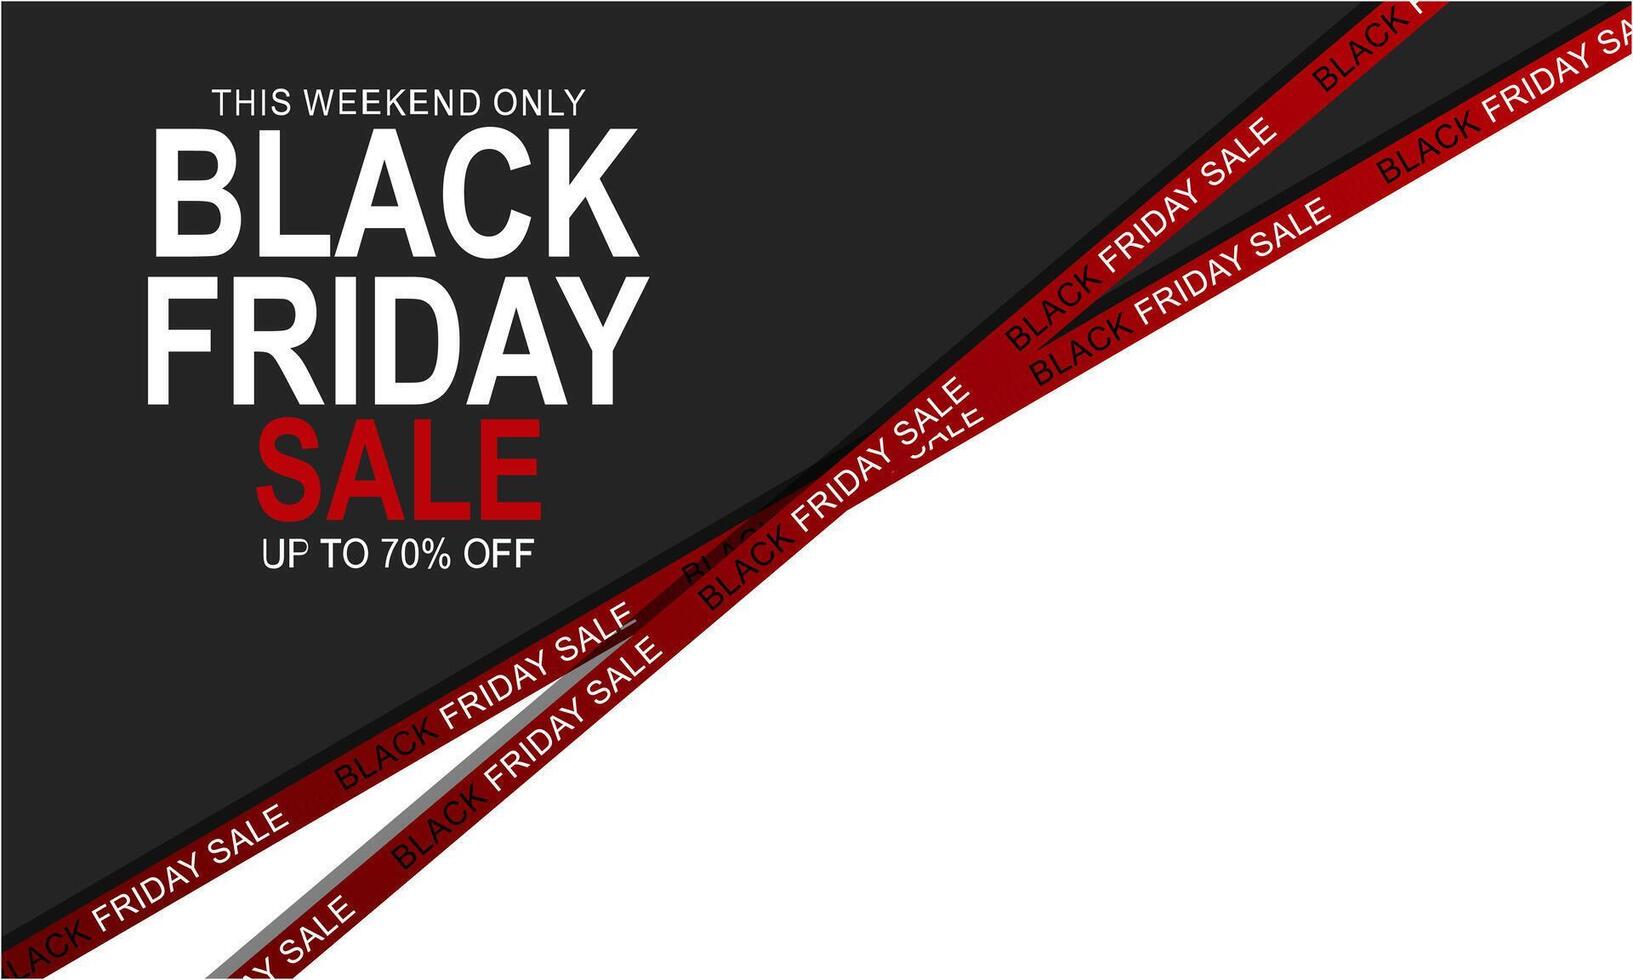 Black Friday banner. Special discount offer design vector